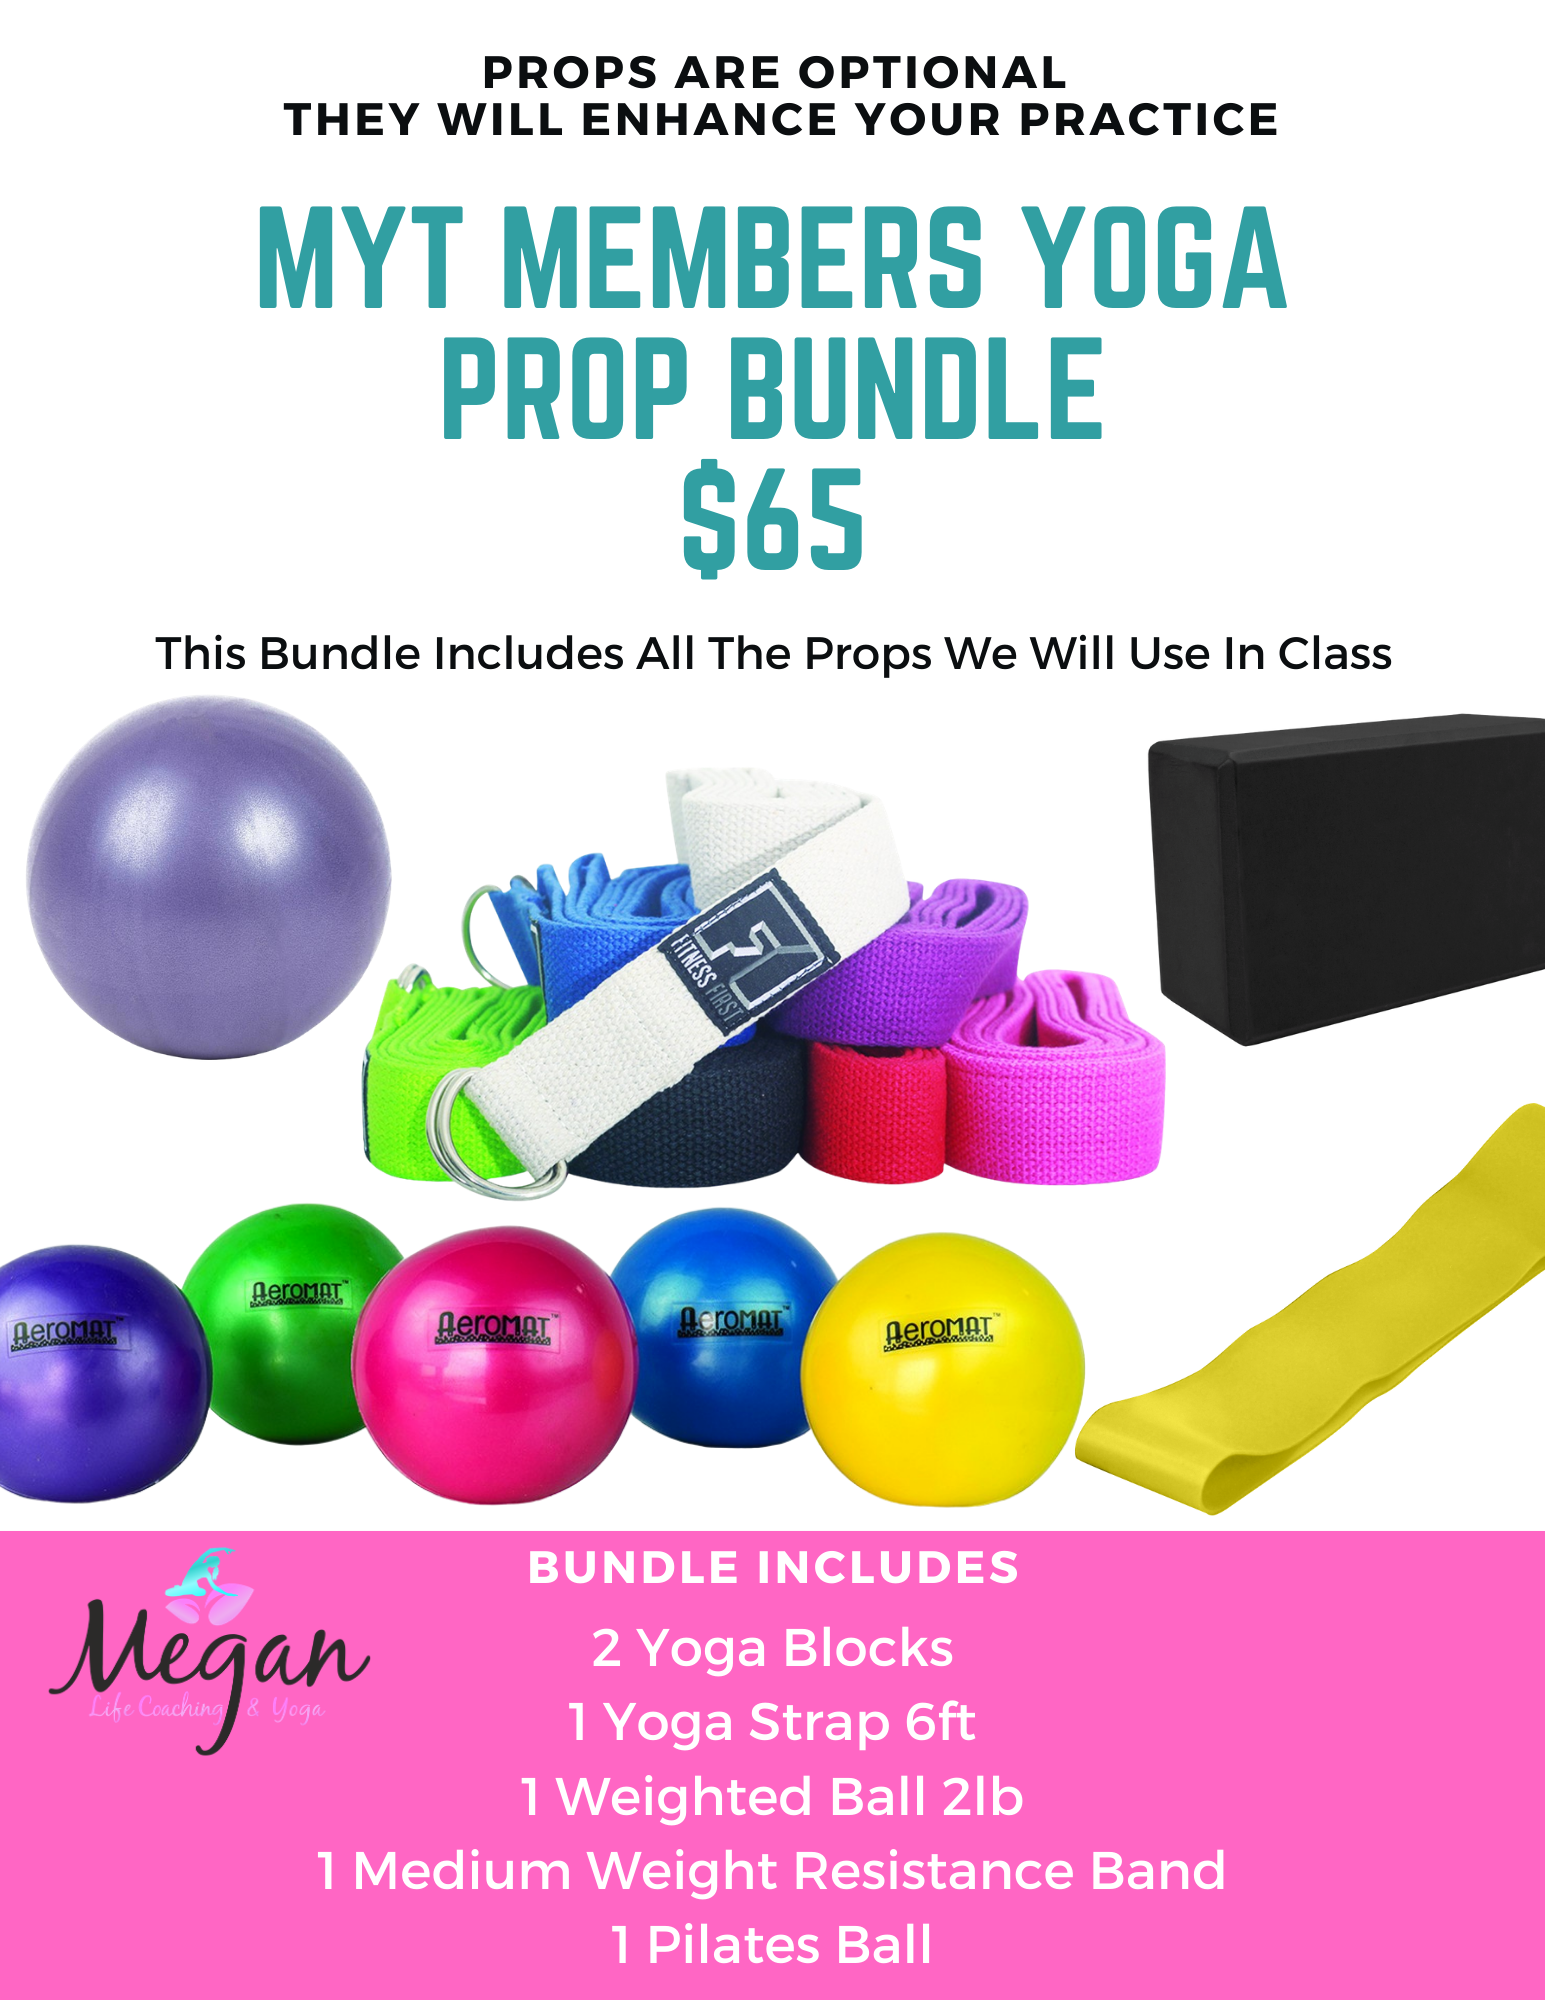 MYT Members yoga prop bundle